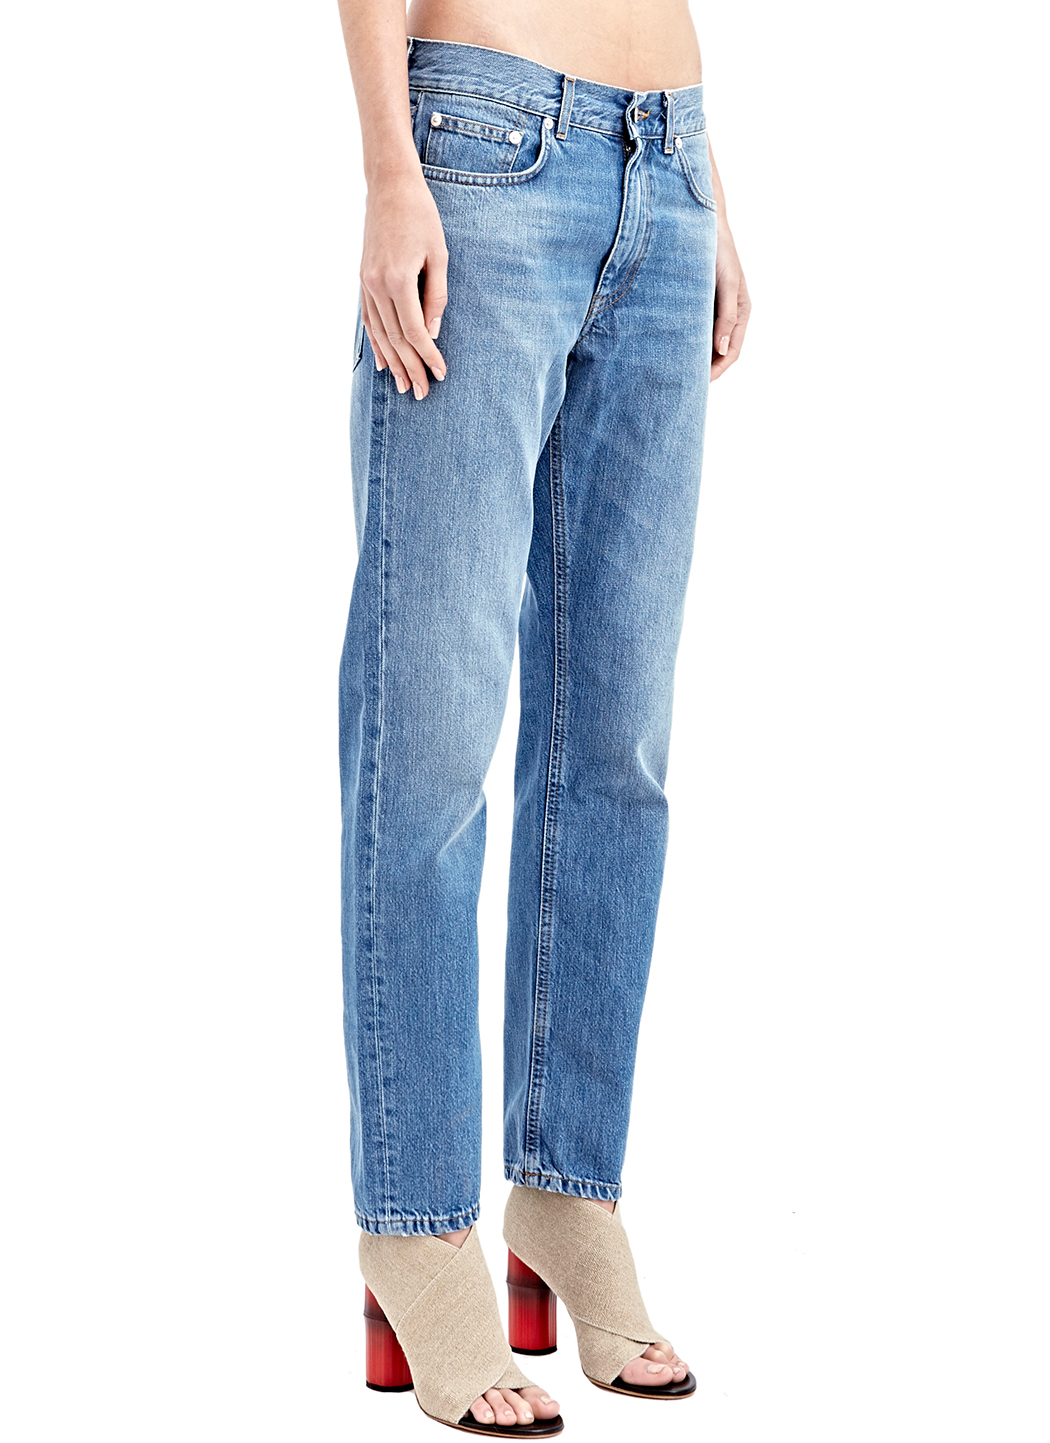 Acne Studios Boy Vintage Jeans in Blue - Lyst